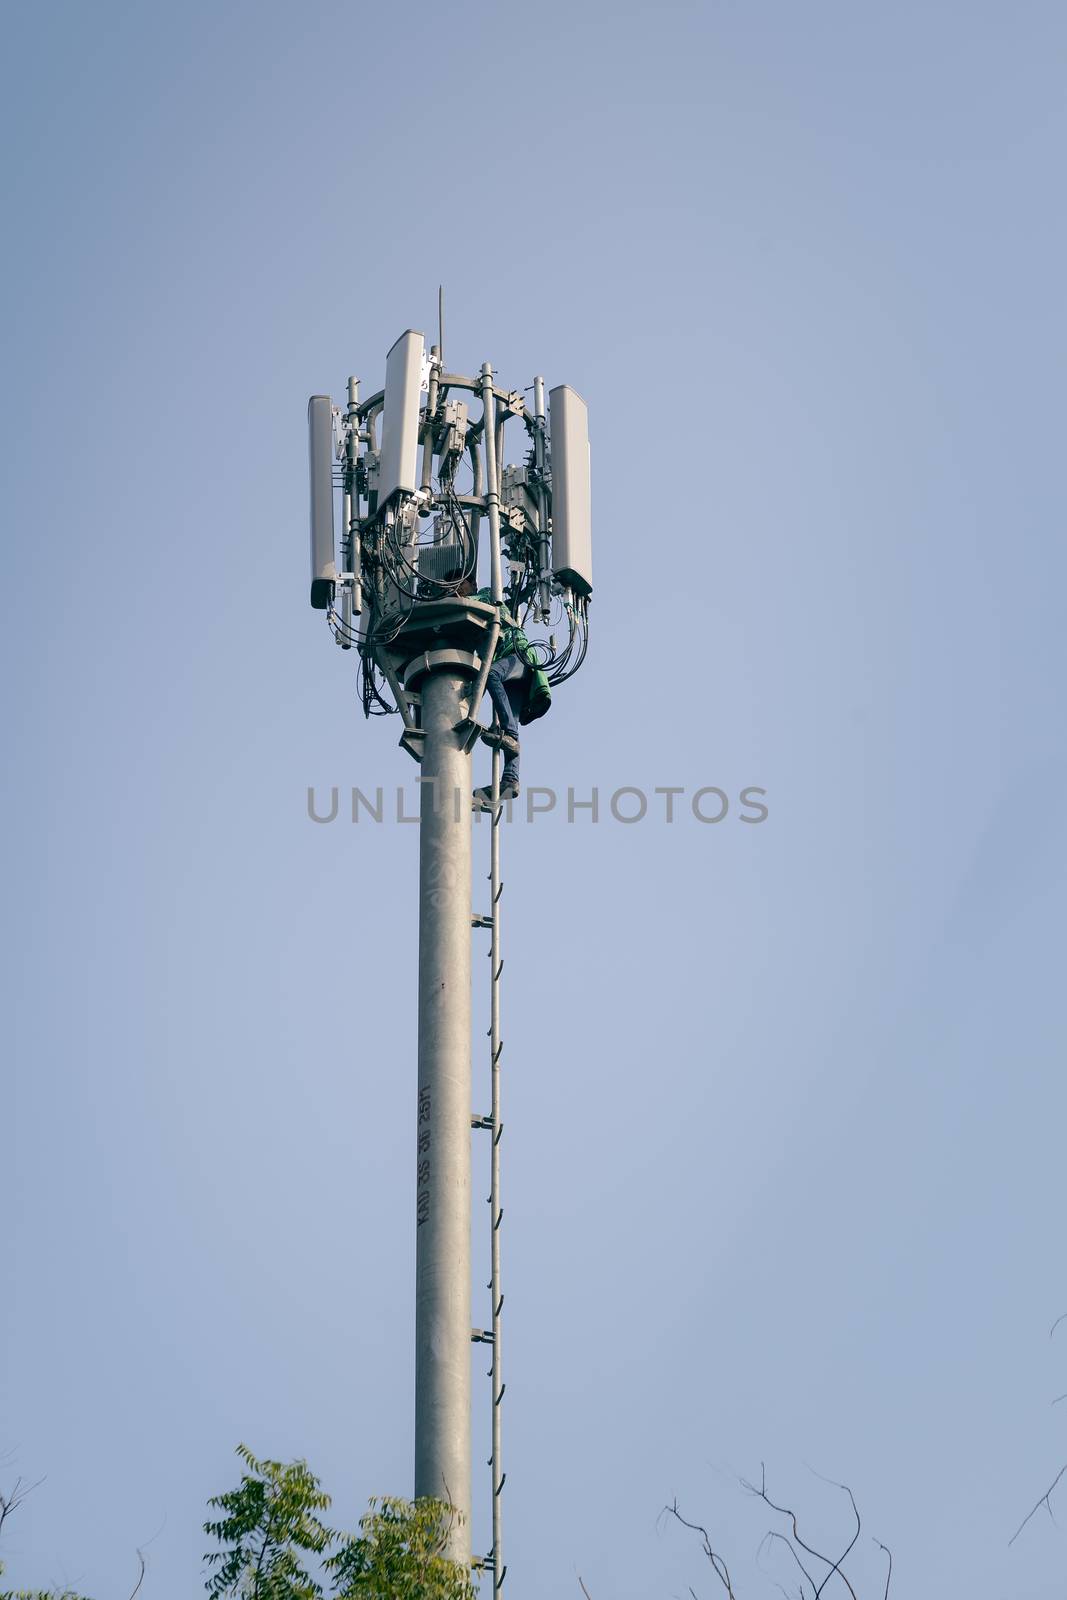 An Indian man working on Telecommunication tower. by ziprashantzi